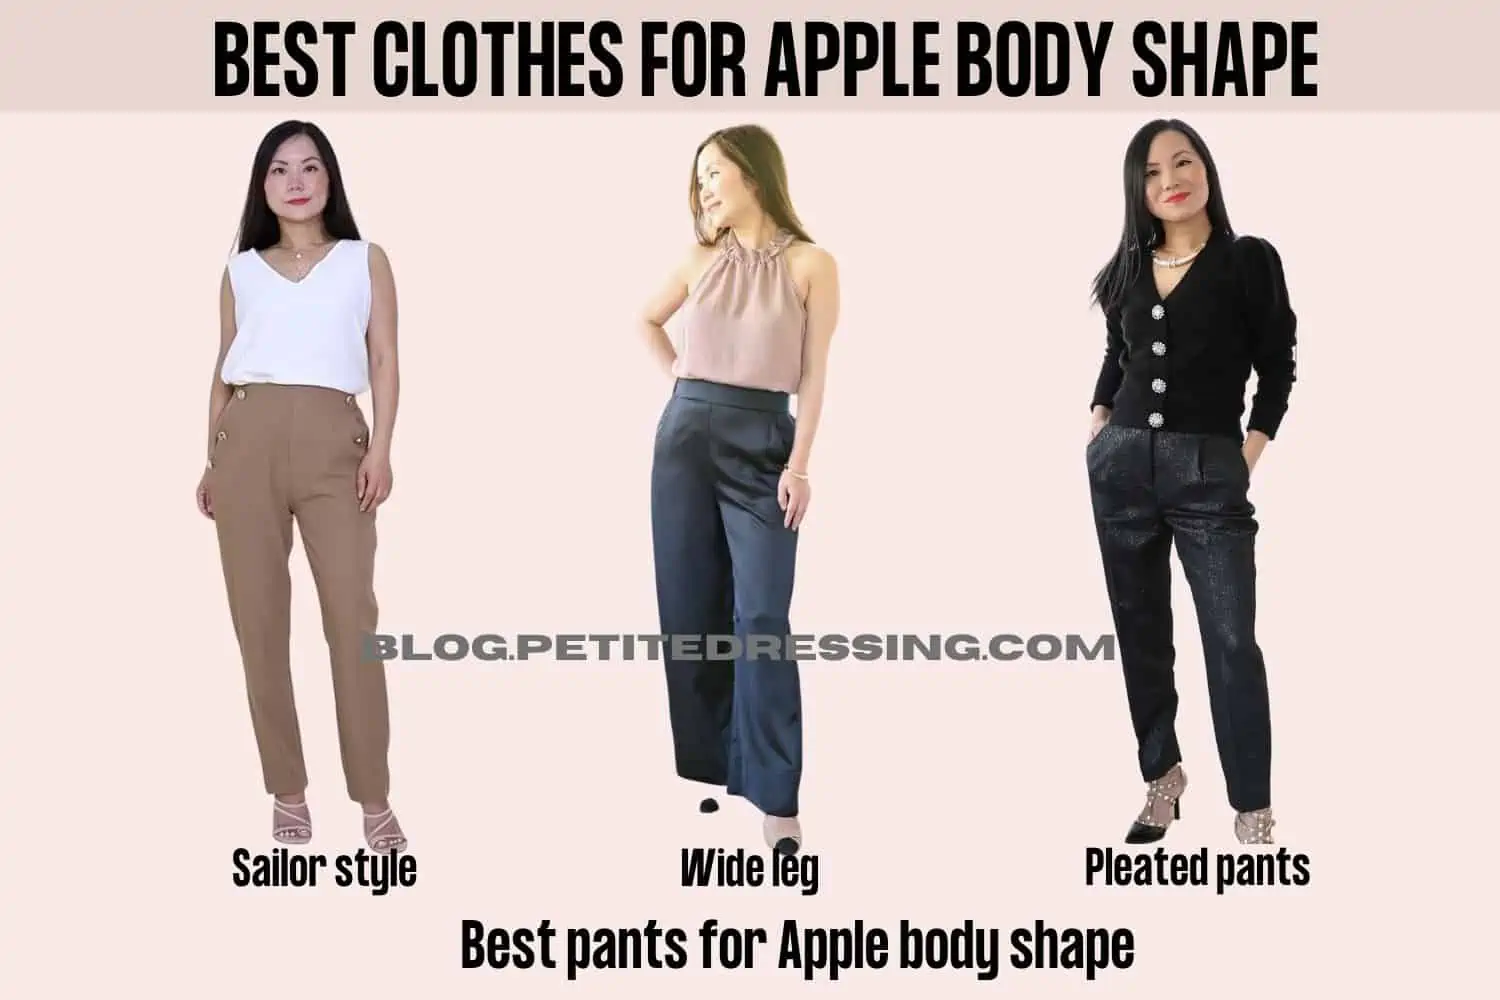 Top dresses if you have apple shape body 😍✨ #styletips #petitefashion  #petitestyle #petitefashionblogger #petieblogger #shortgirl #s